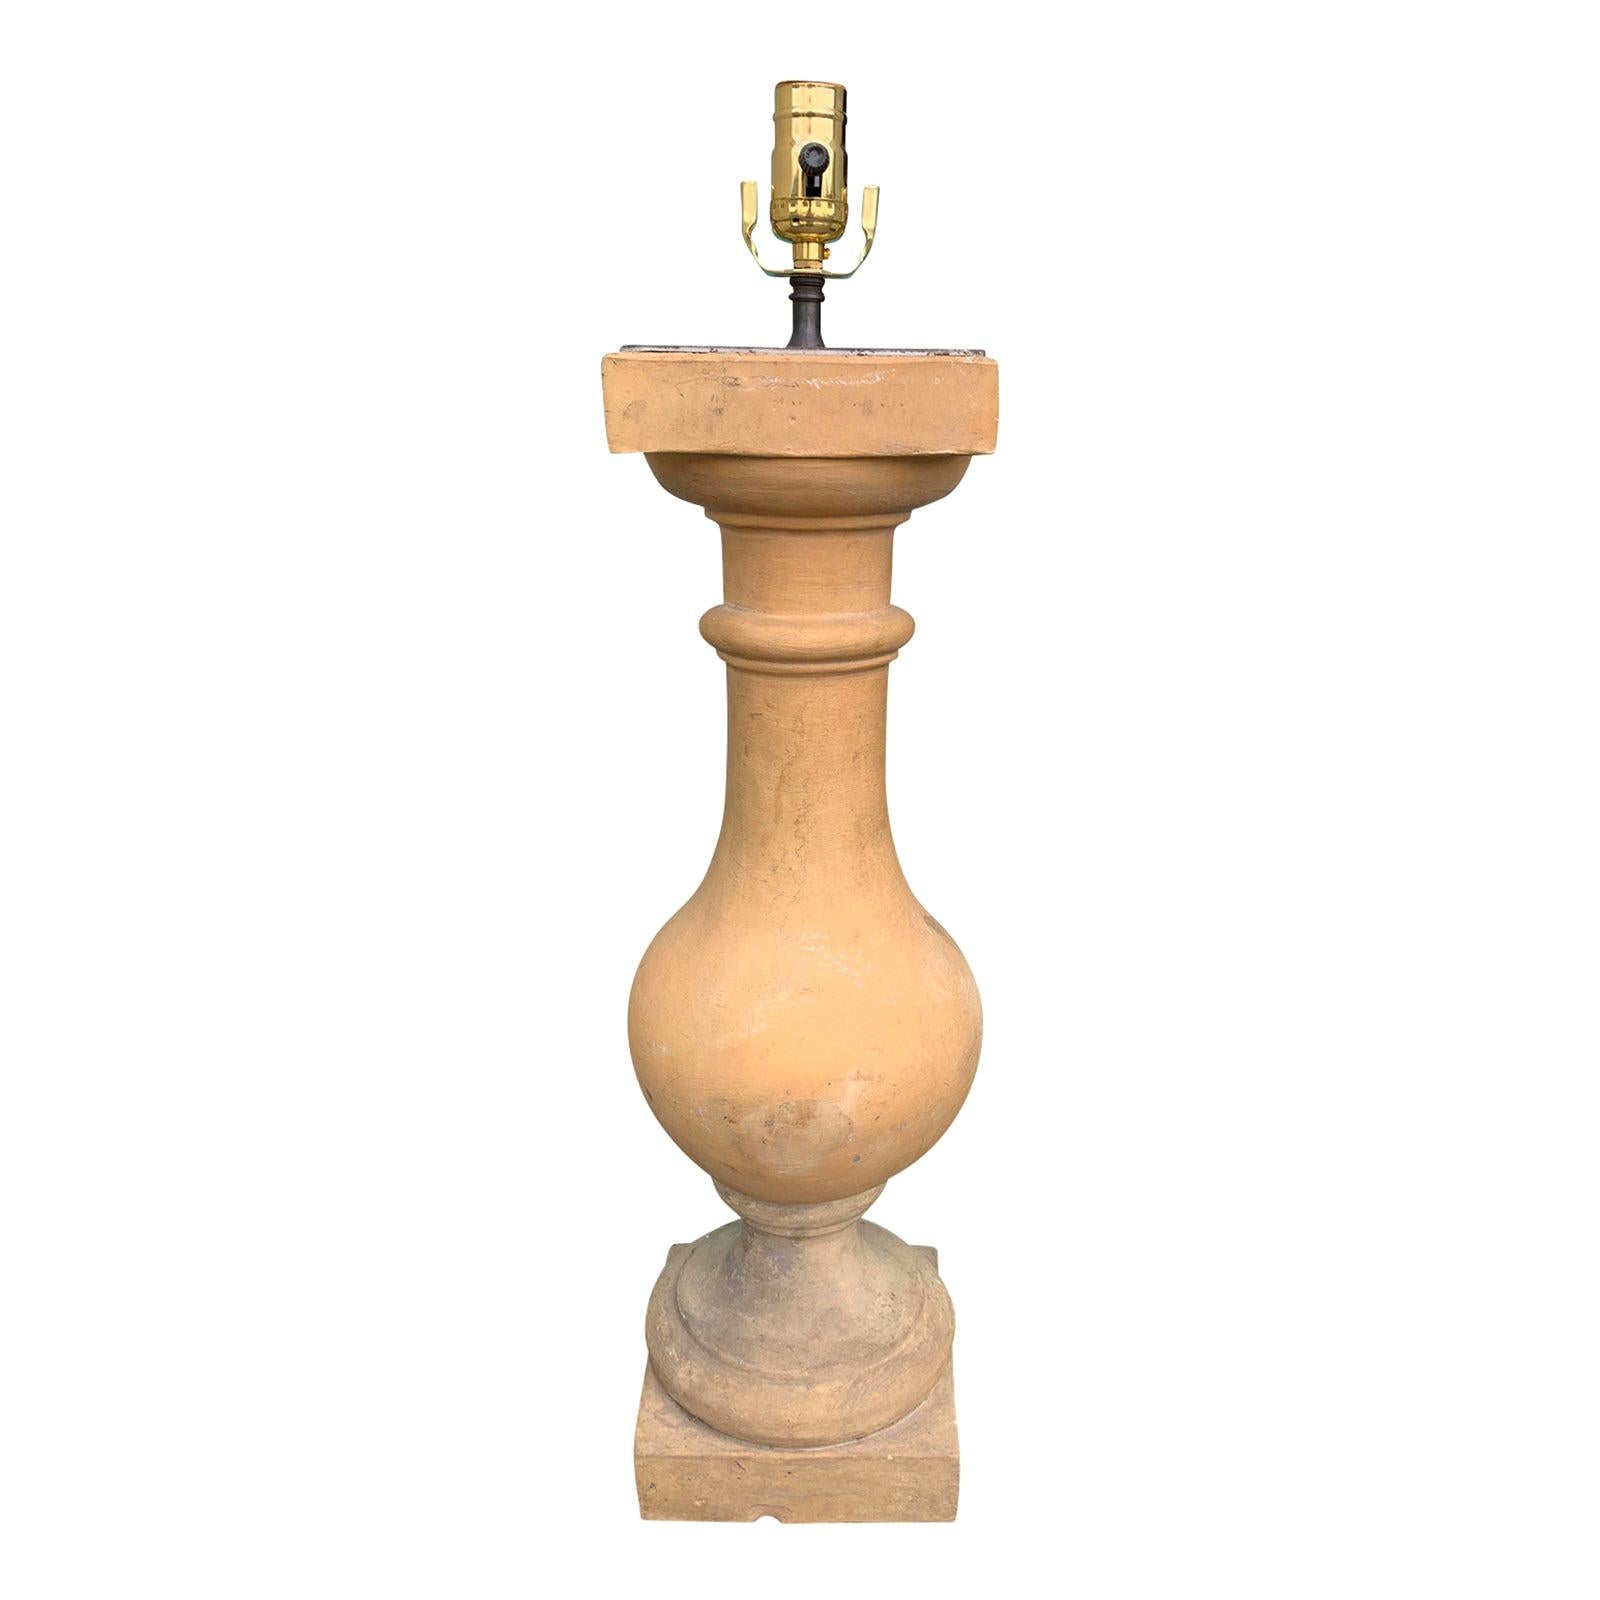 19th-20th Century Terracotta Balustrade Lamp